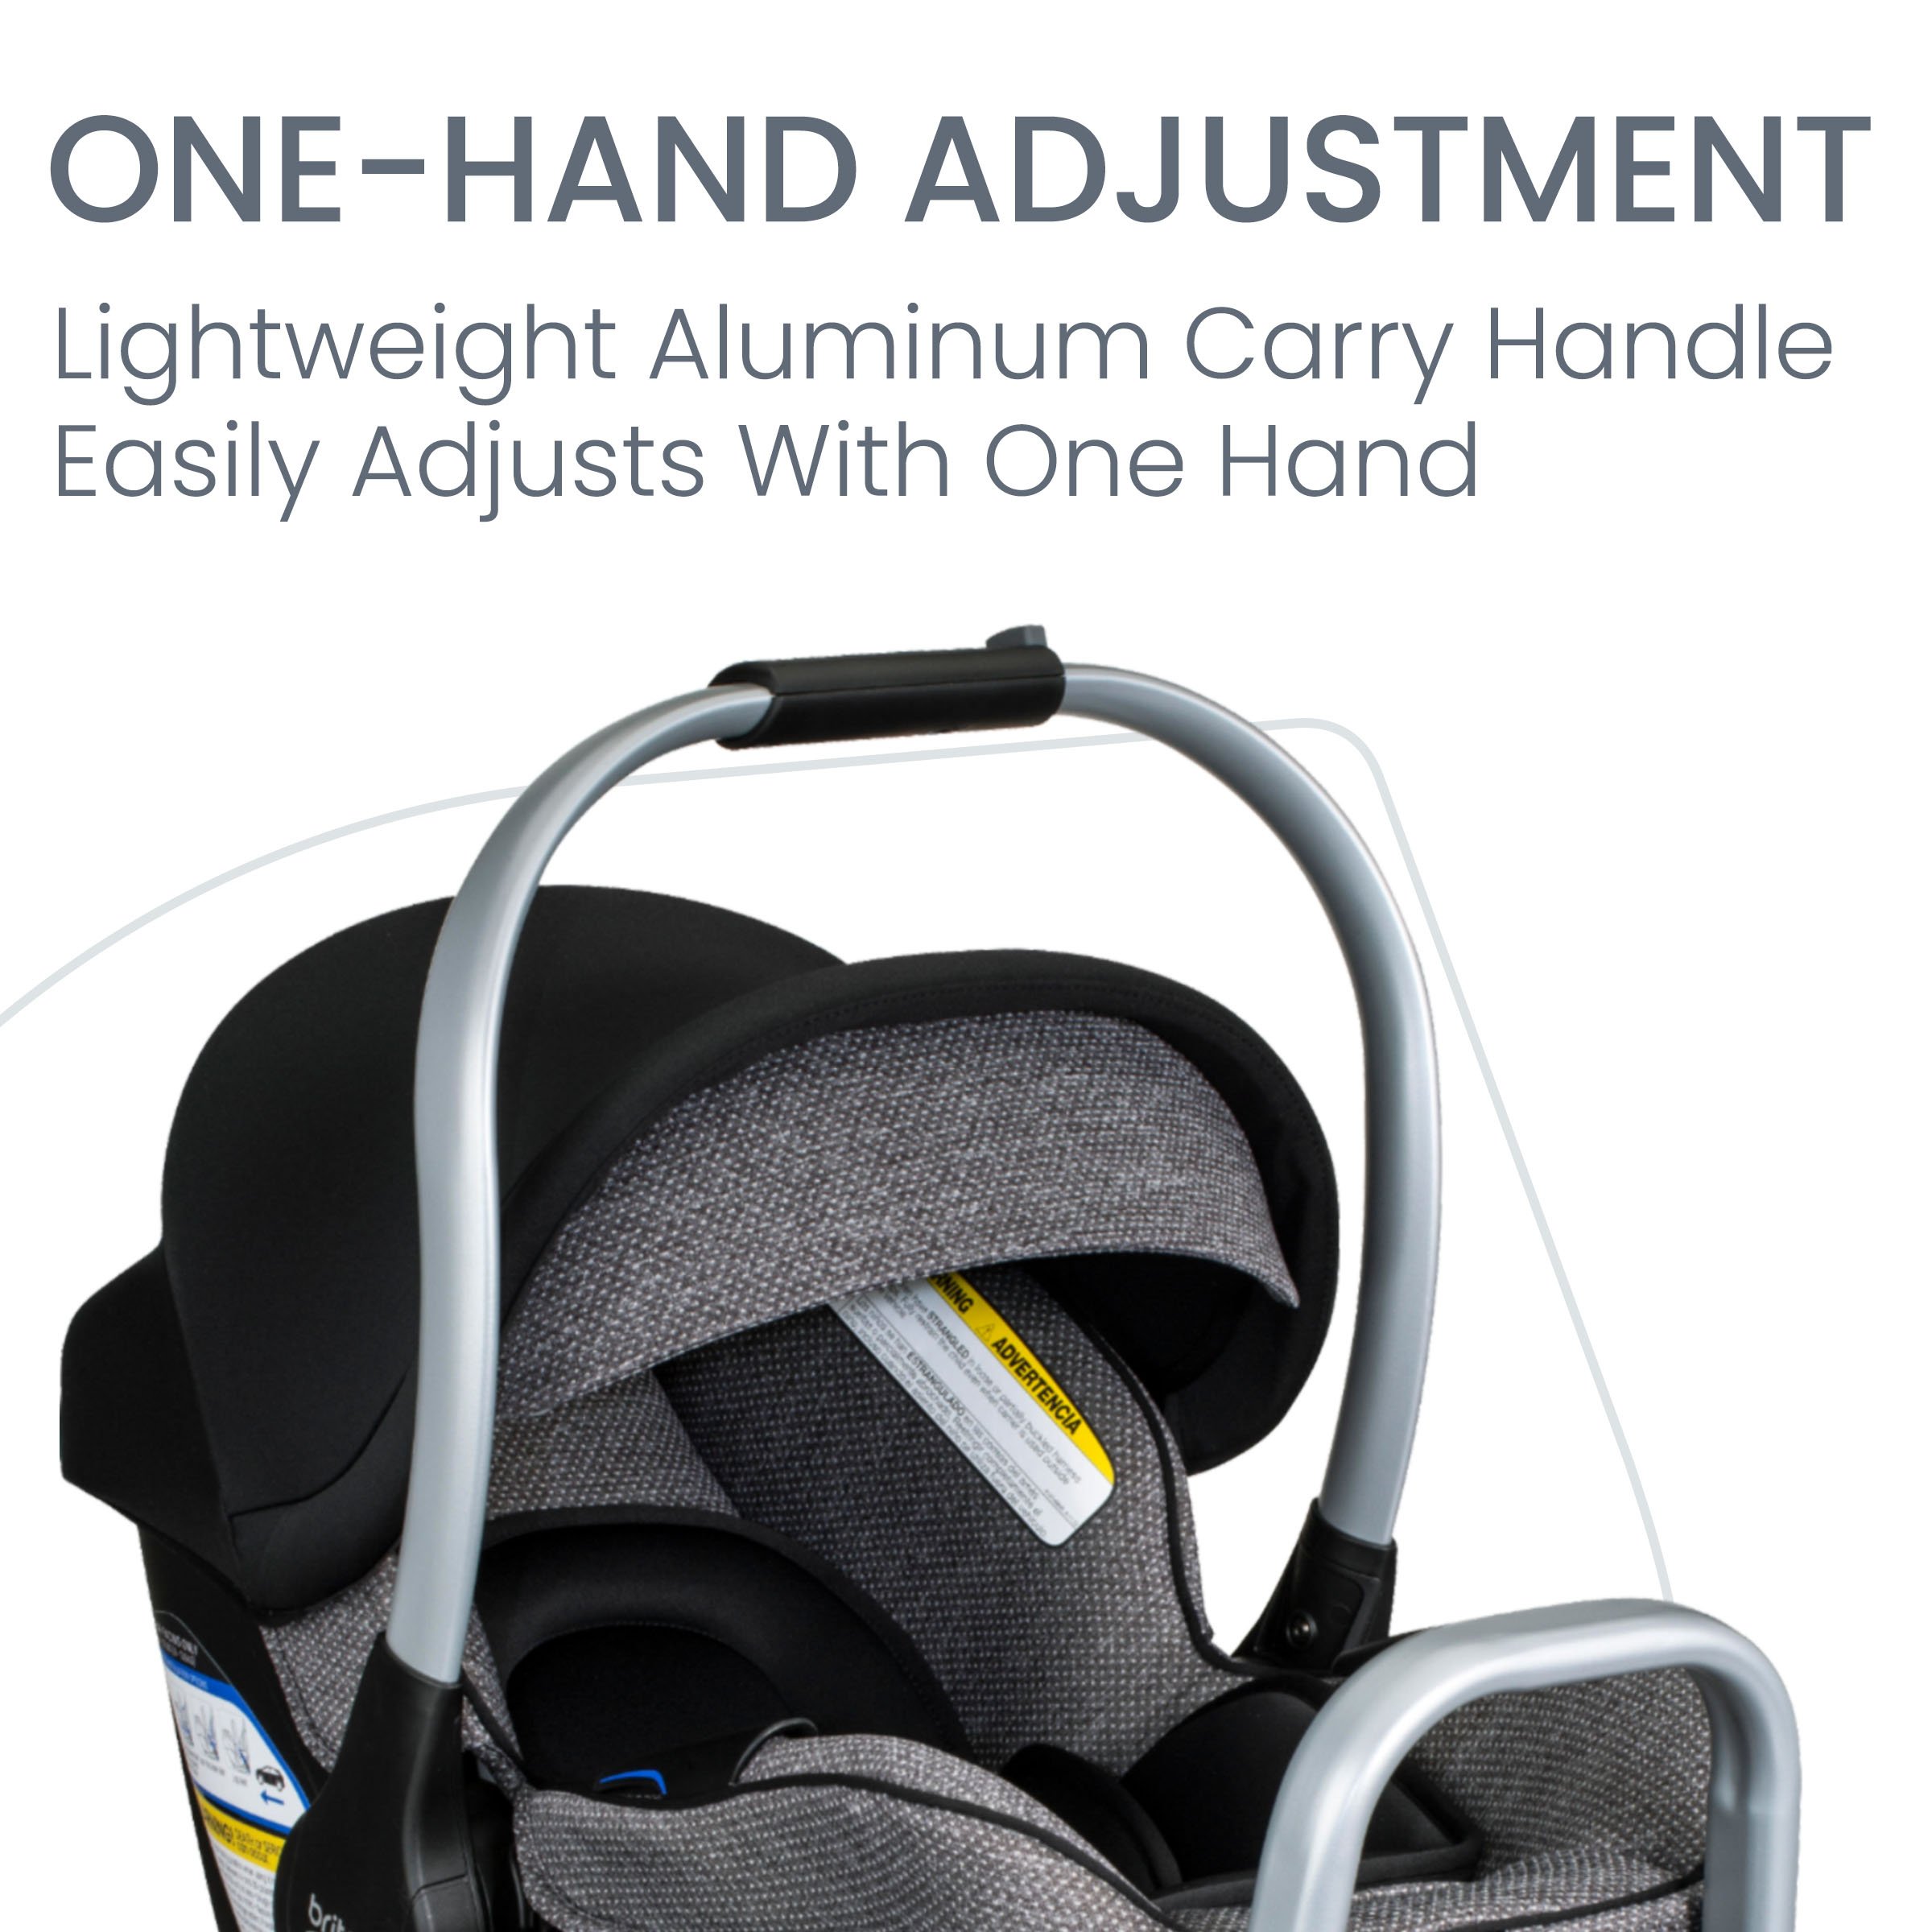 Lightweight Aluminum carry handle